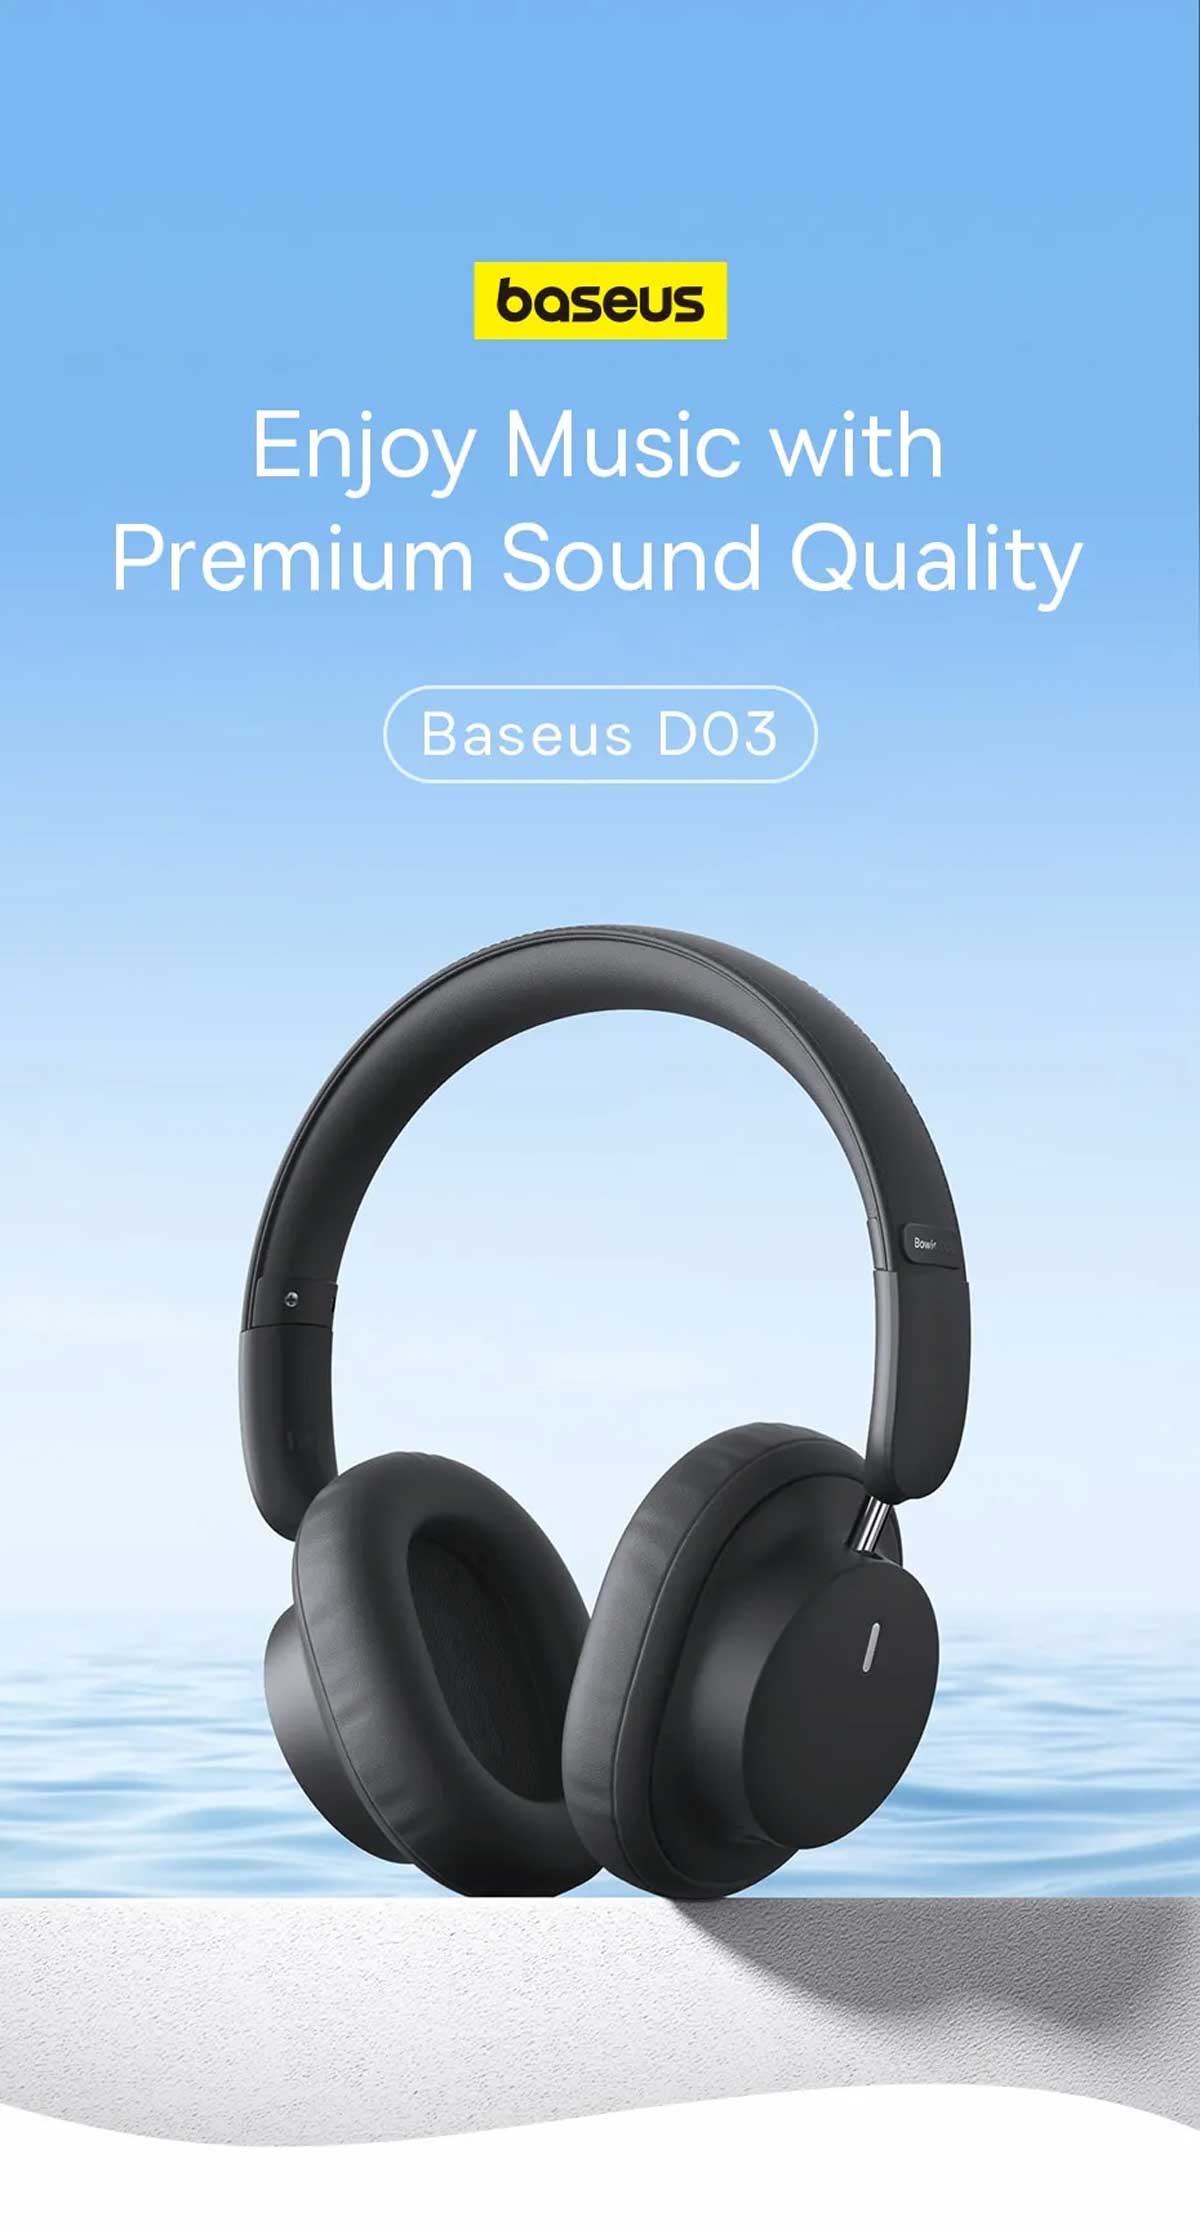 Baseus Bowie D03 Wireless Headphones 15